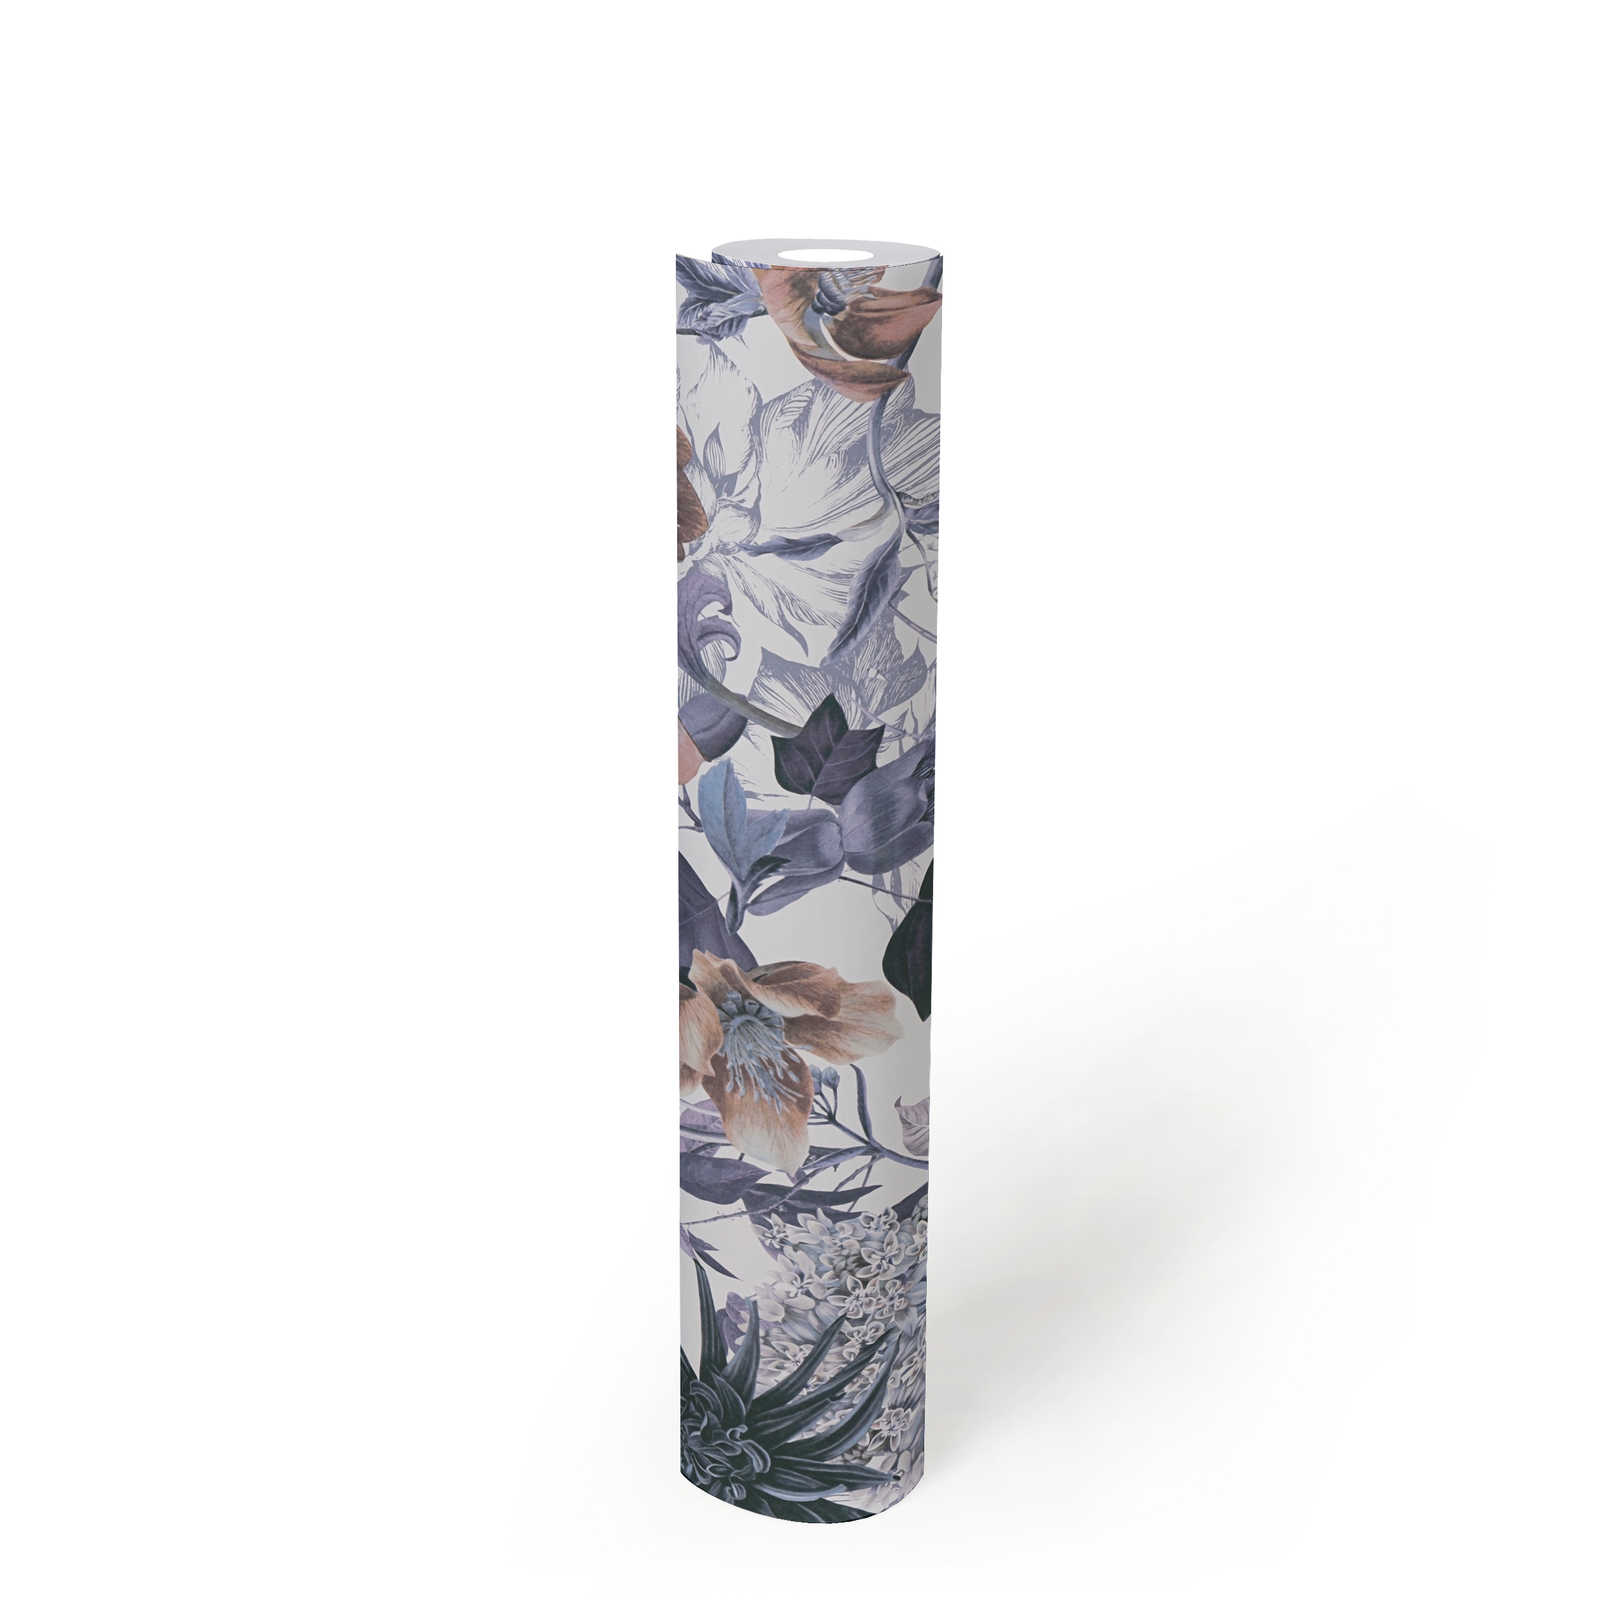             Blumentapete mit floralem Muster – Blau, Braun, Grau
        